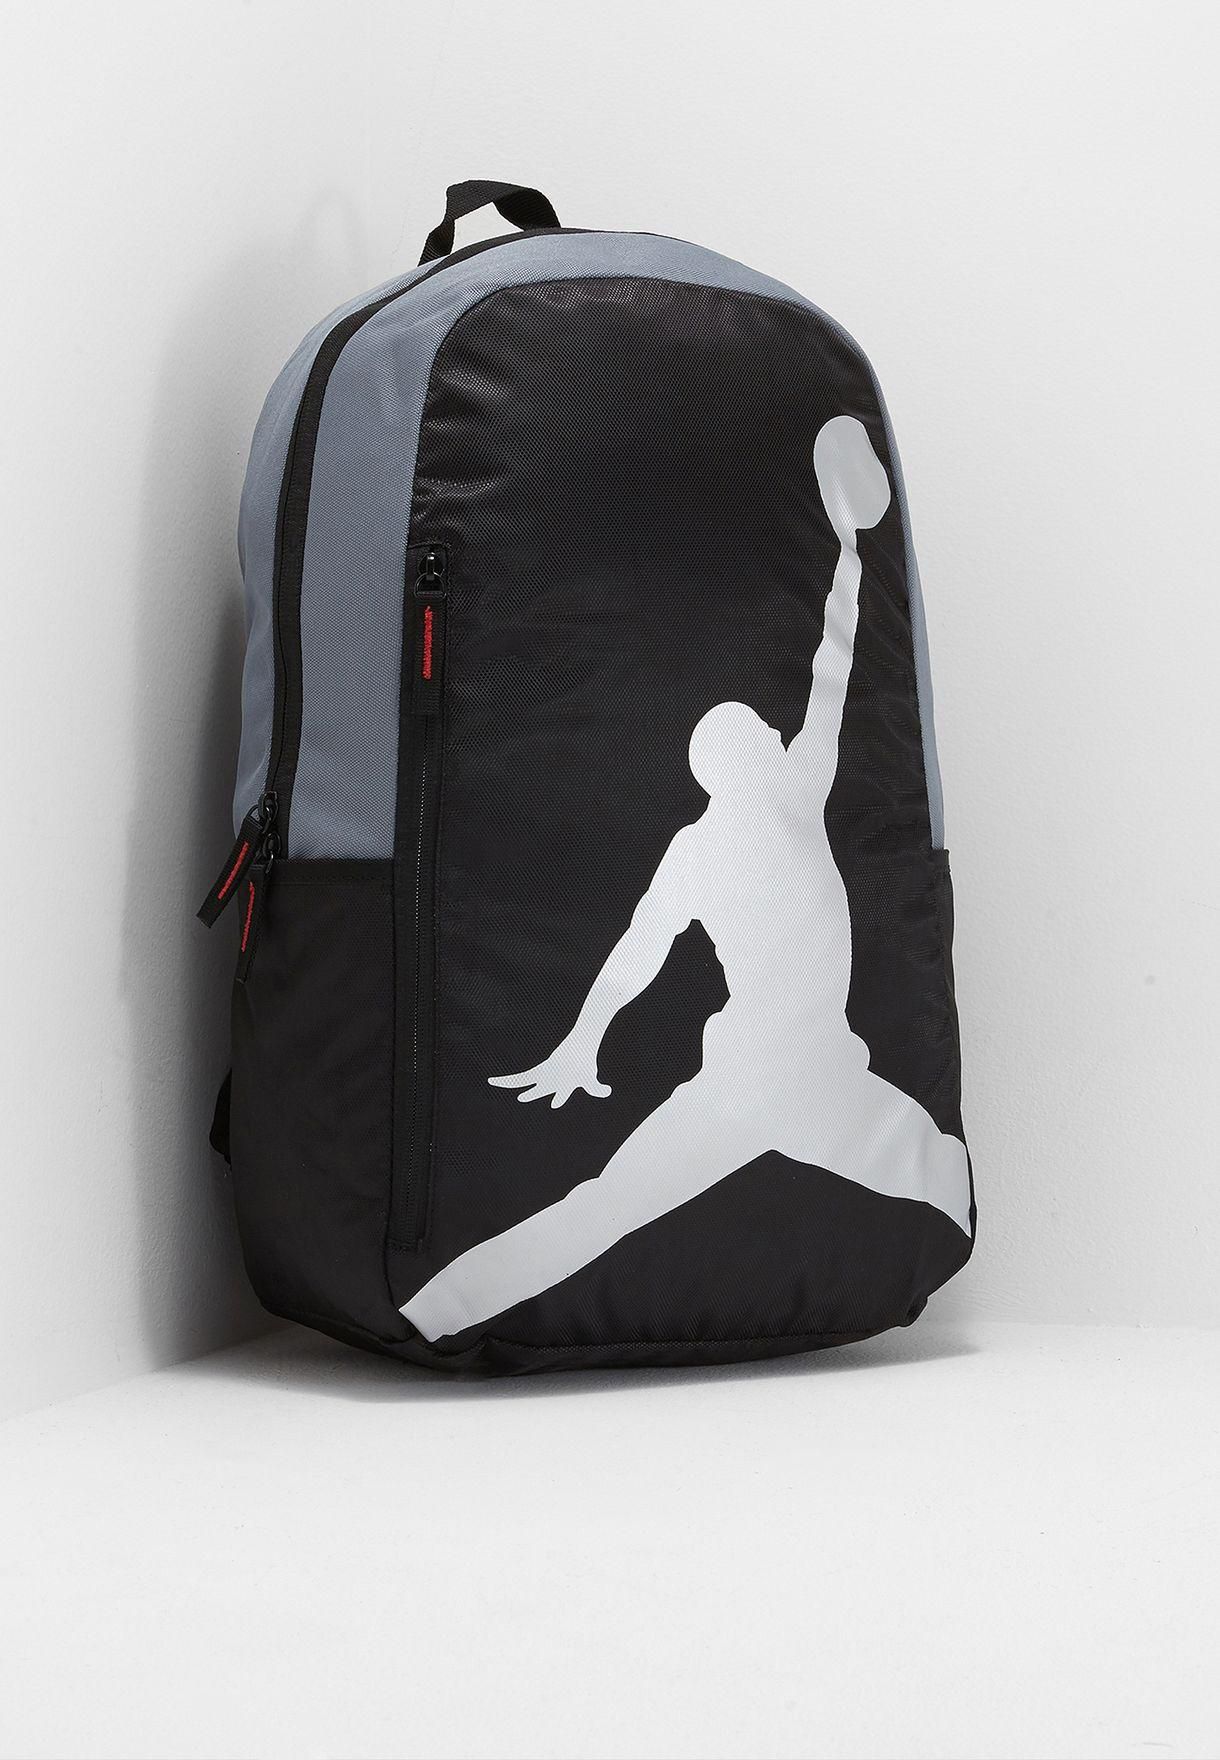 Jordan Jumpman Backpack price from namshi in Saudi Arabia - Yaoota!